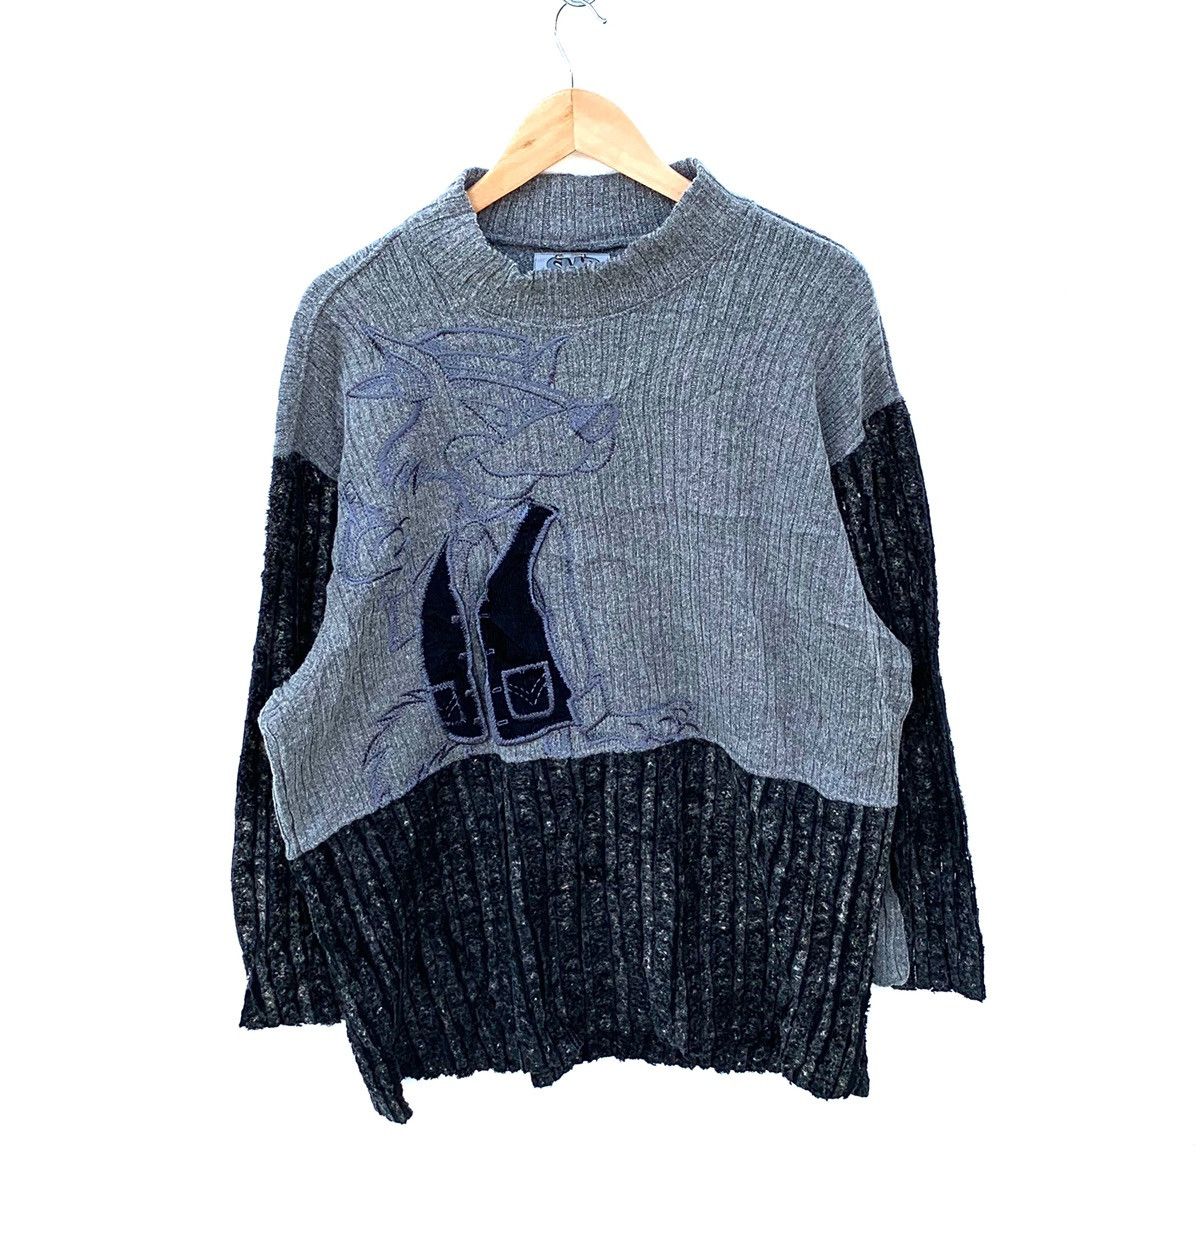 Japanese Brand Jack duvan knitwear fleece | Grailed